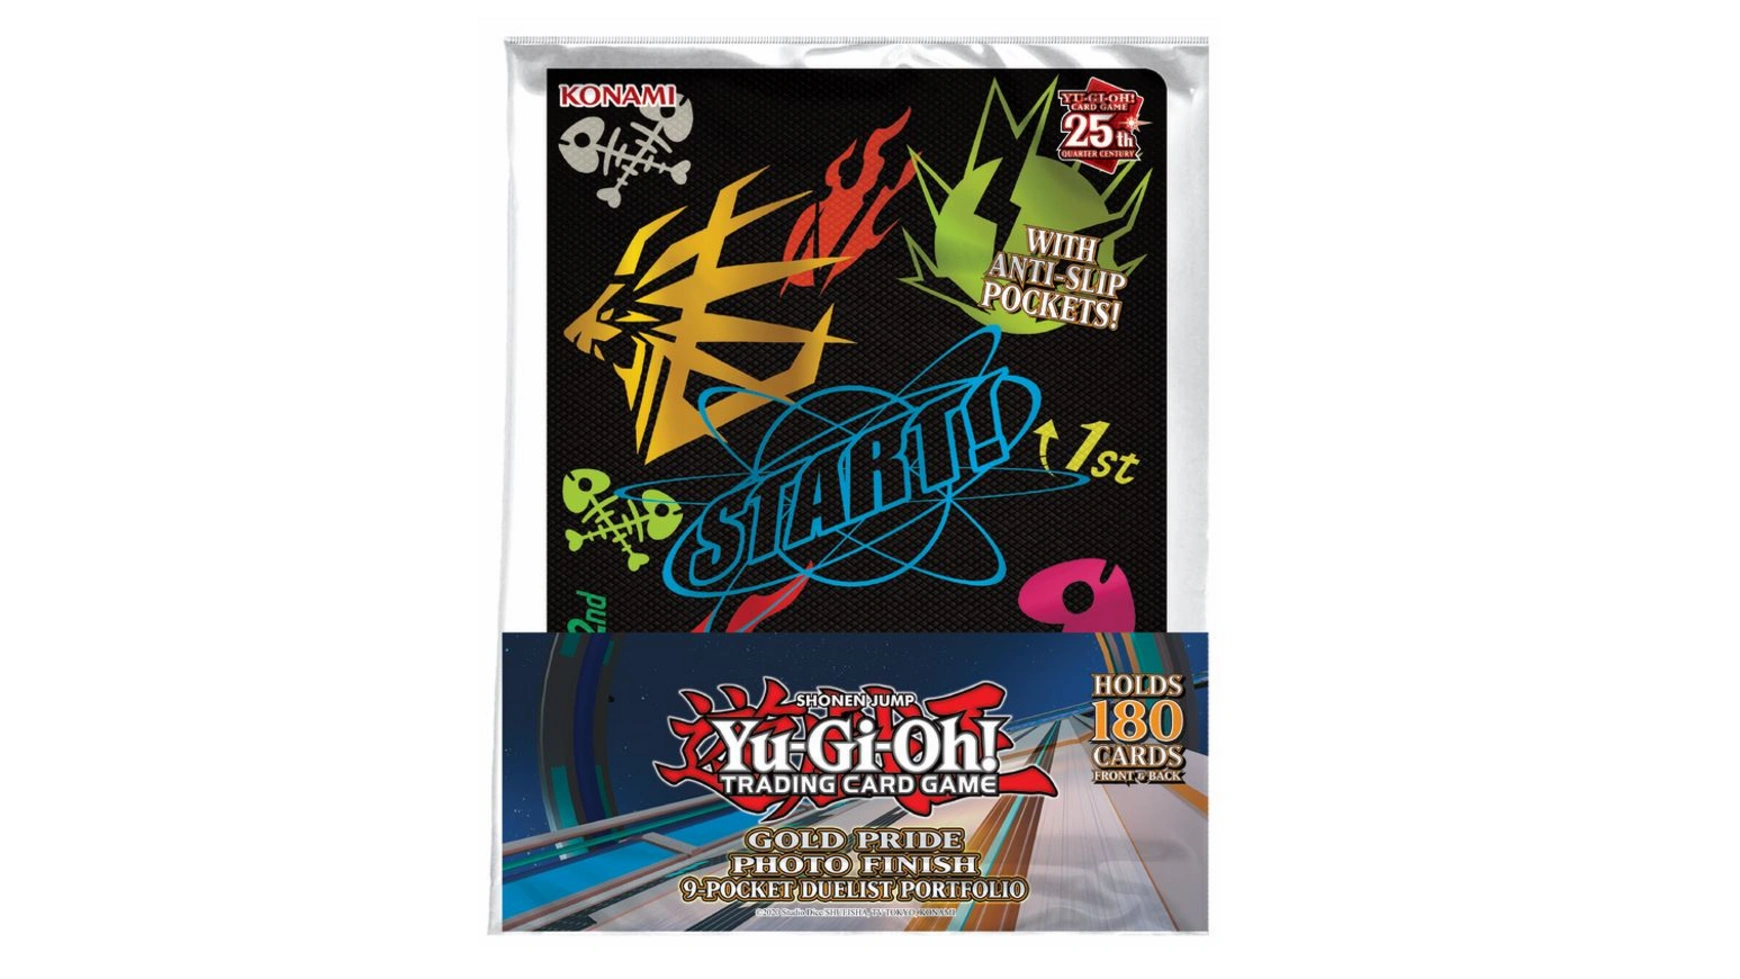 Коллекционная карточная игра Yu-Gi-Oh портфолио дуэлянта с 9 карманами для фотофиниша Gold Pride Konami коллекционная карточная игра yu gi oh обложки для карт gold pride carrie s crew konami